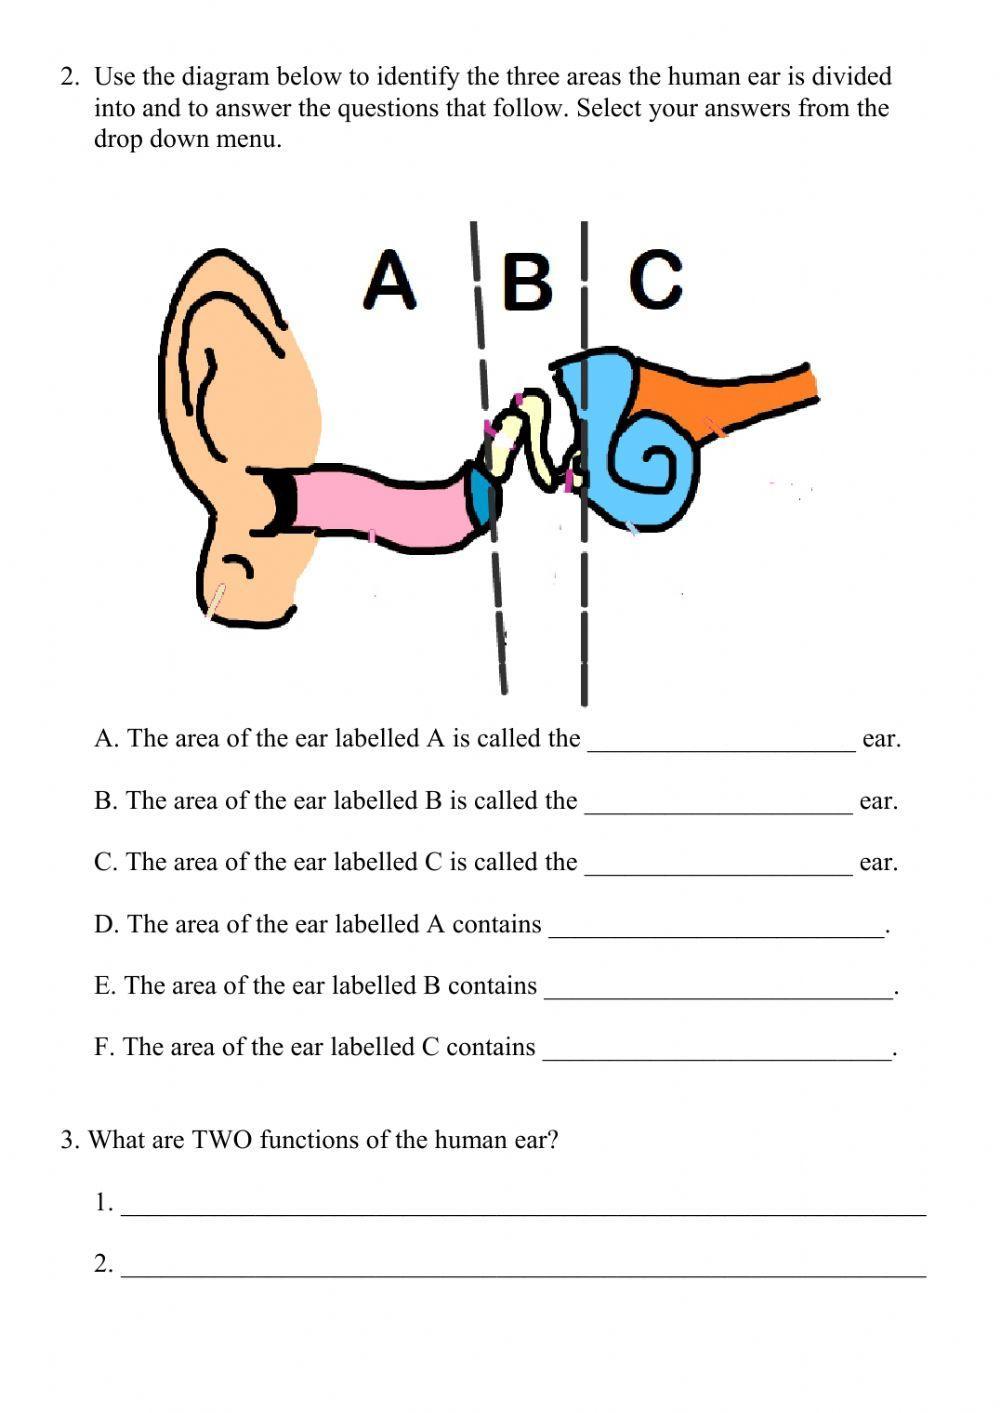 Sensory Organs - Parts of the Ear